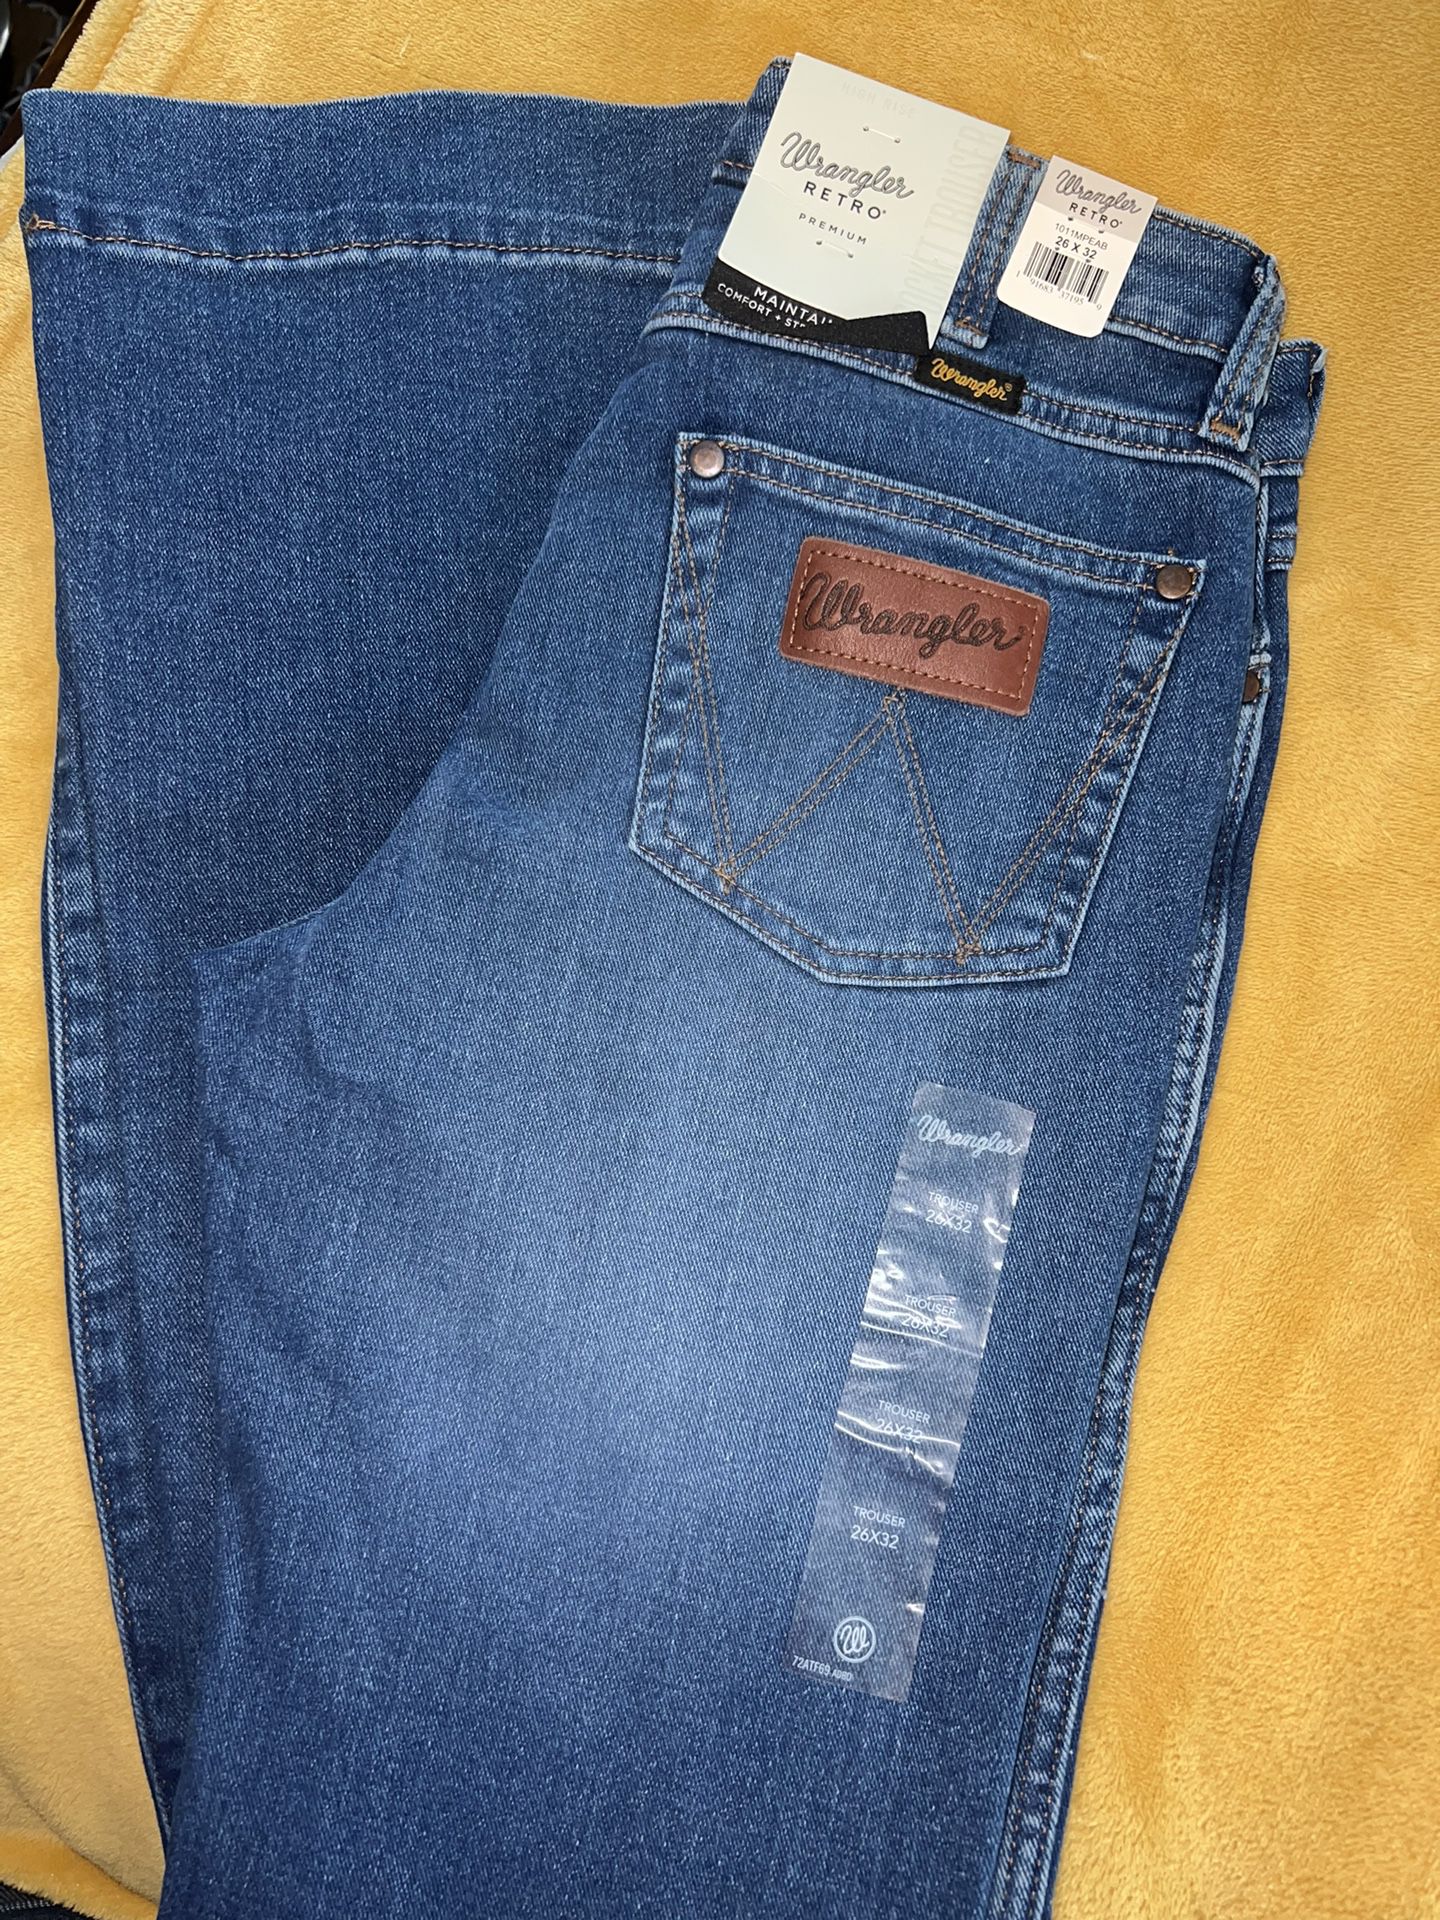 Woman’s Wrangler Jeans New